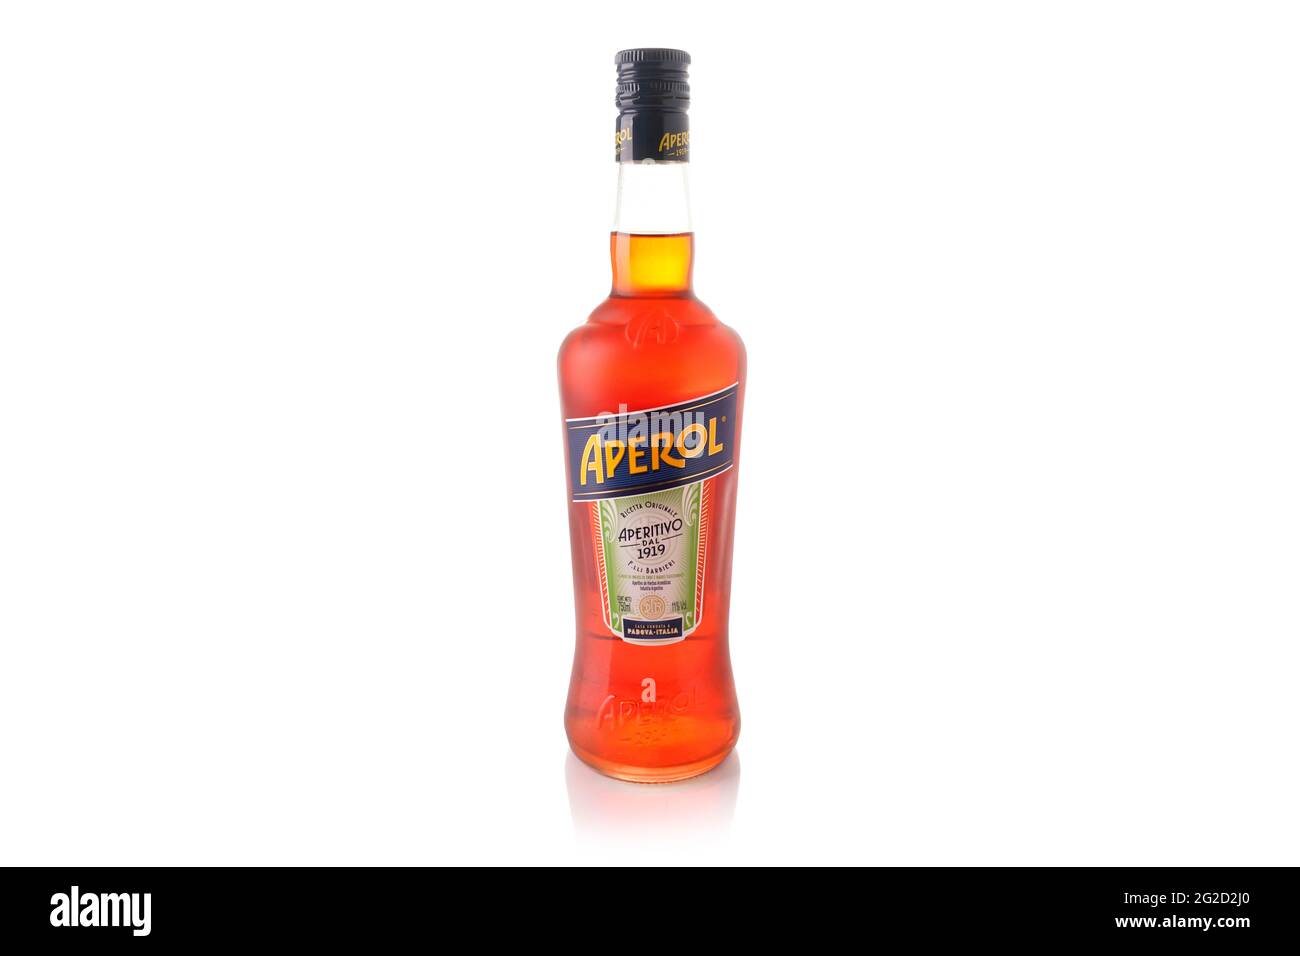 Aperol bottle on white background. Italian aperitif. Alcoholic beverage Stock Photo